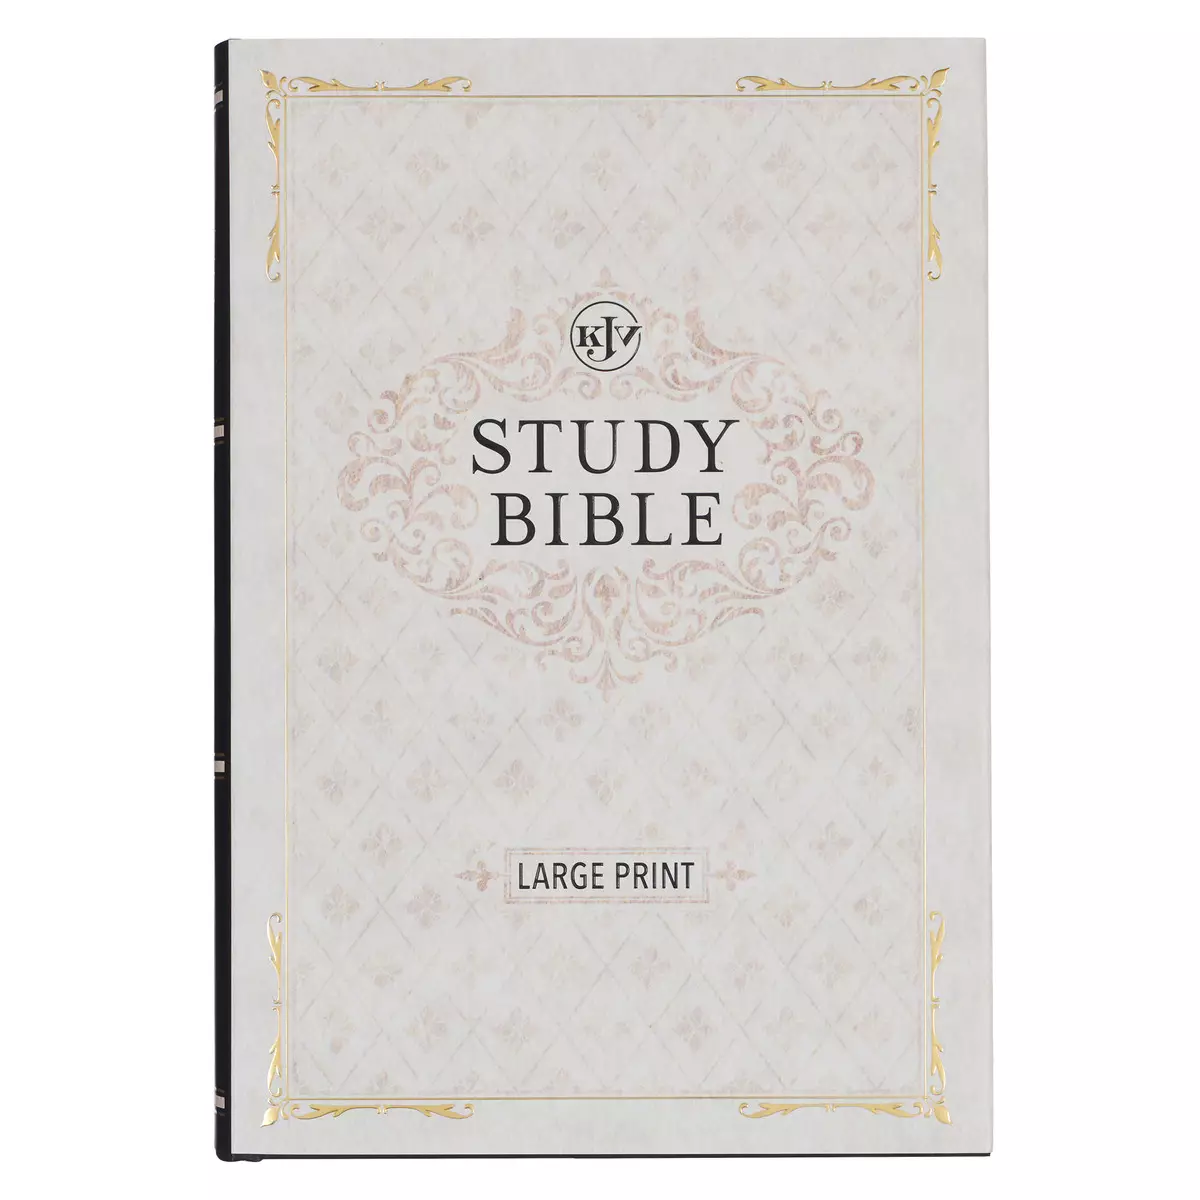 Black Hardcover Large Print King James Version Study Bible